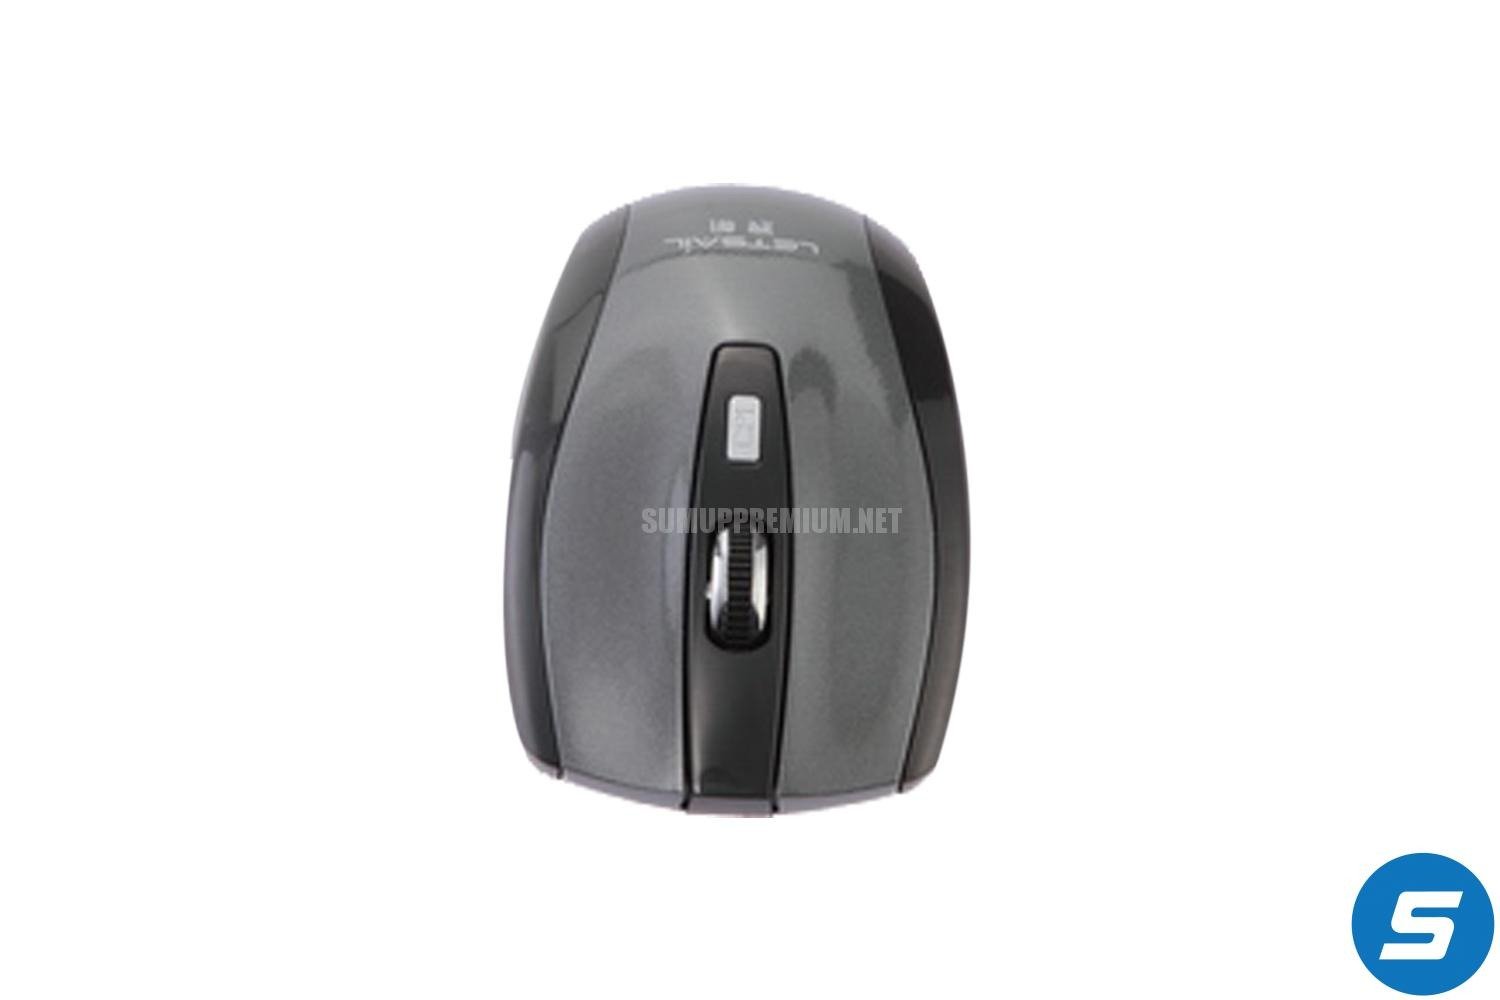 WM-03 Wireless Mouse